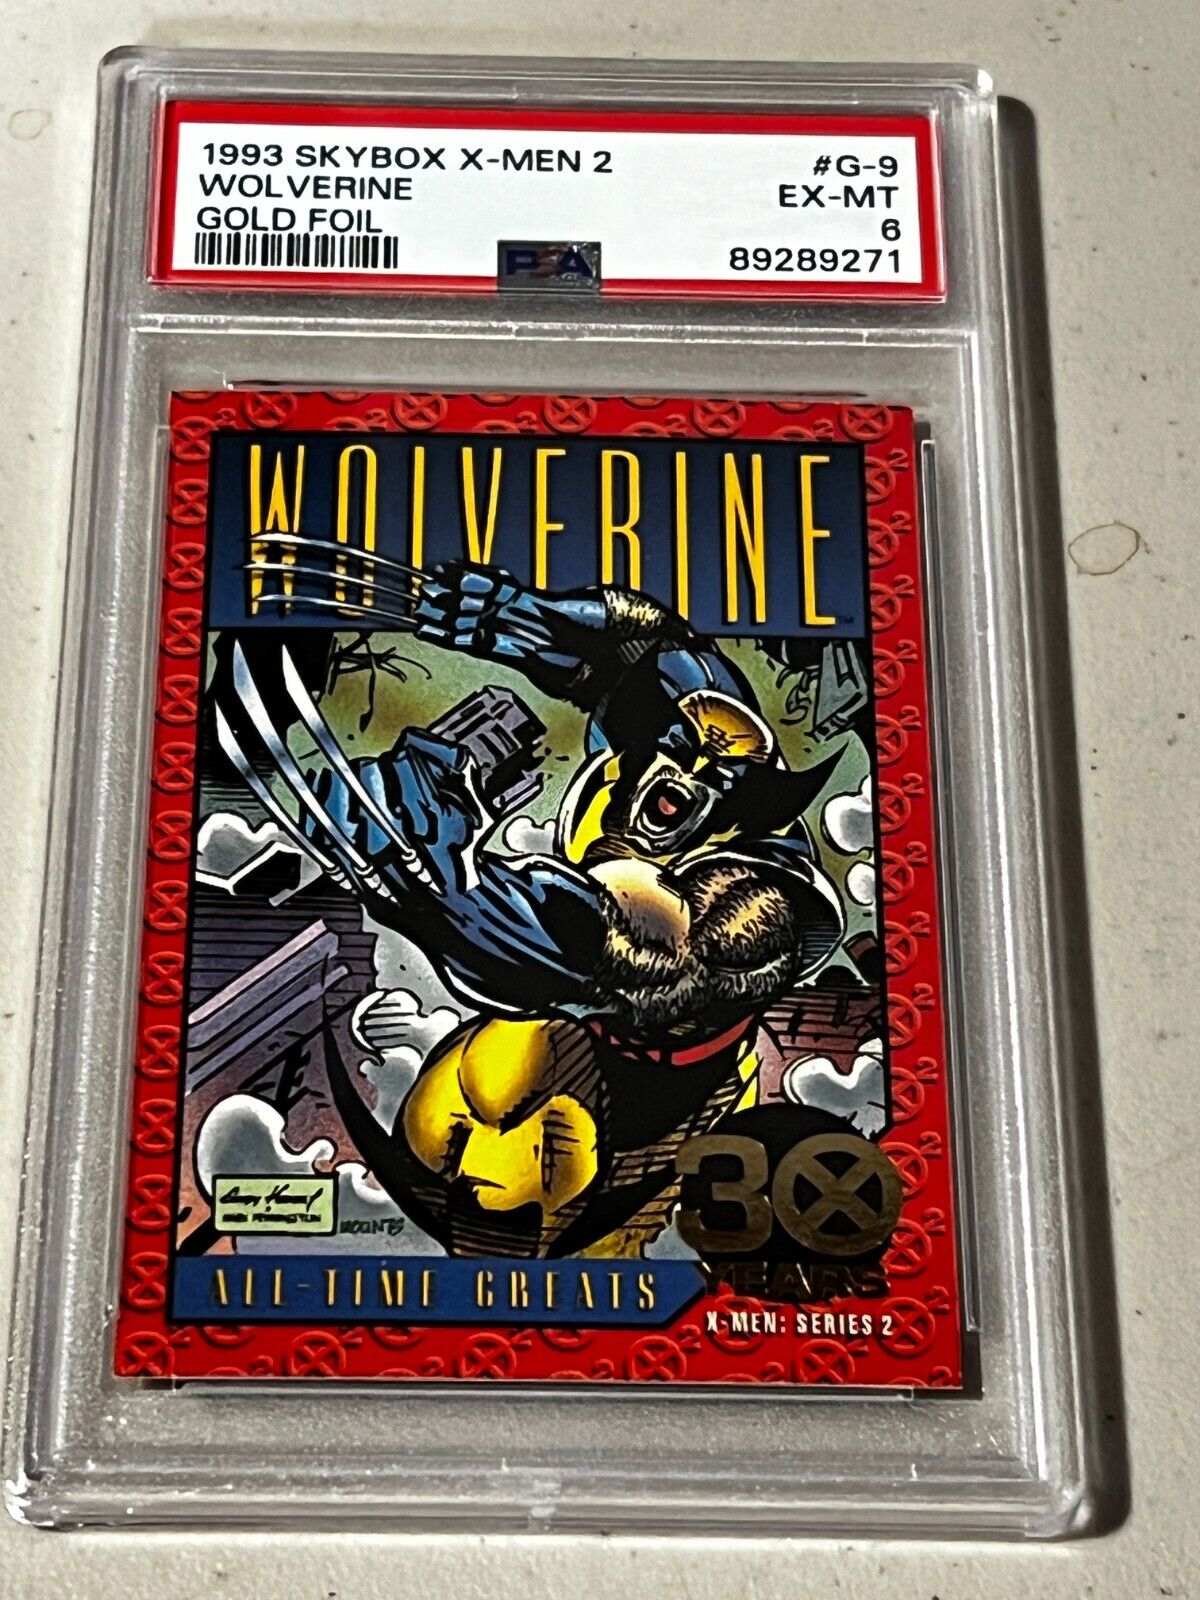 Wolverine 1993 Skybox X-Men Series 2 30 Years Gold Foil Marvel #G-9 PSA 6 EX-MT